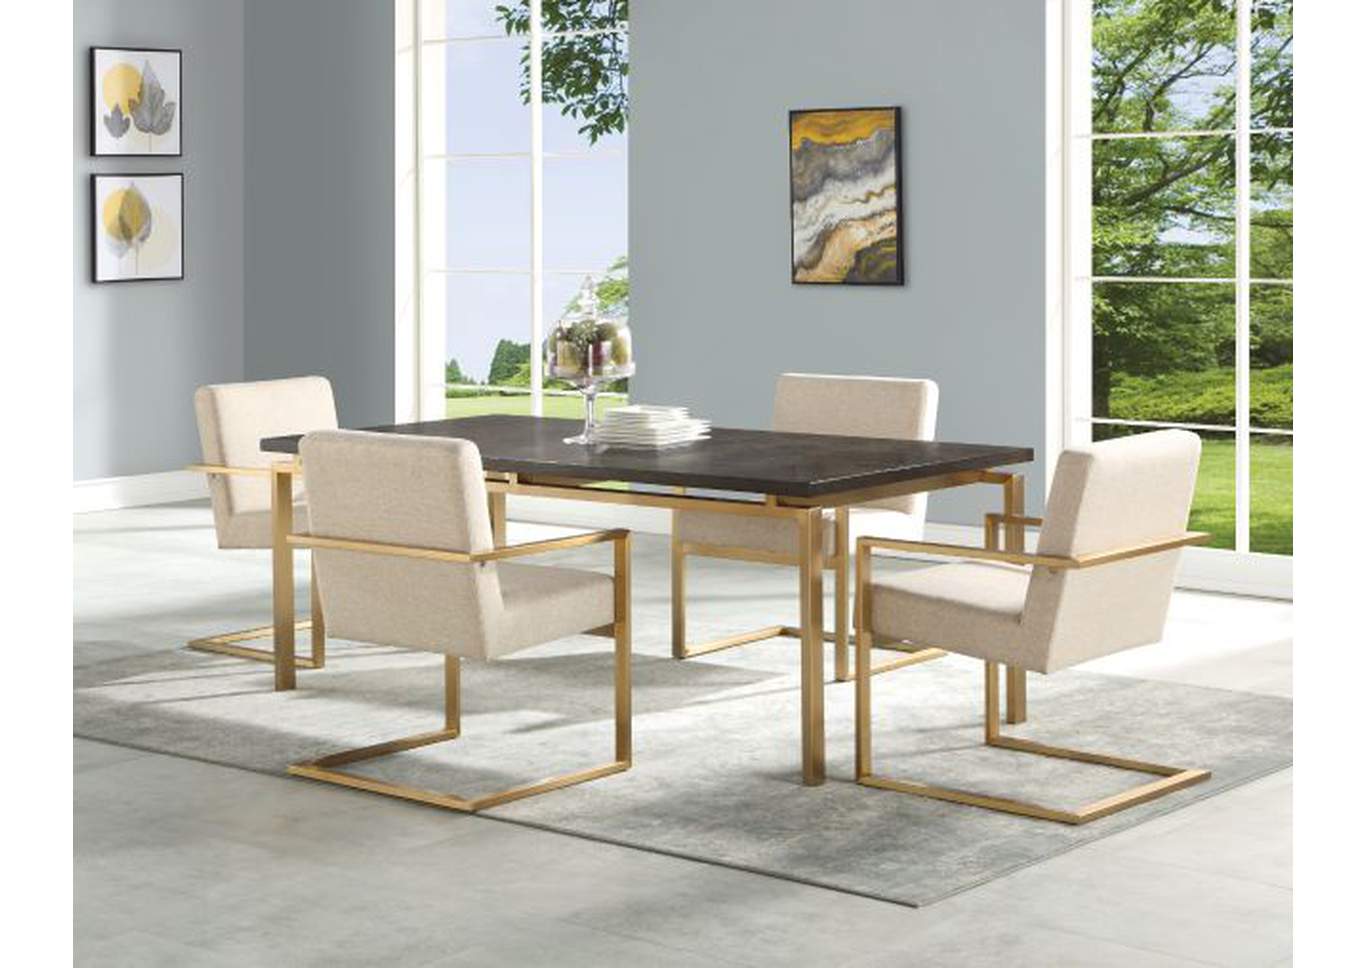 Maya Ash & Gold 5 Piece Dining Set W/ 4 Chairs,Flexsteel